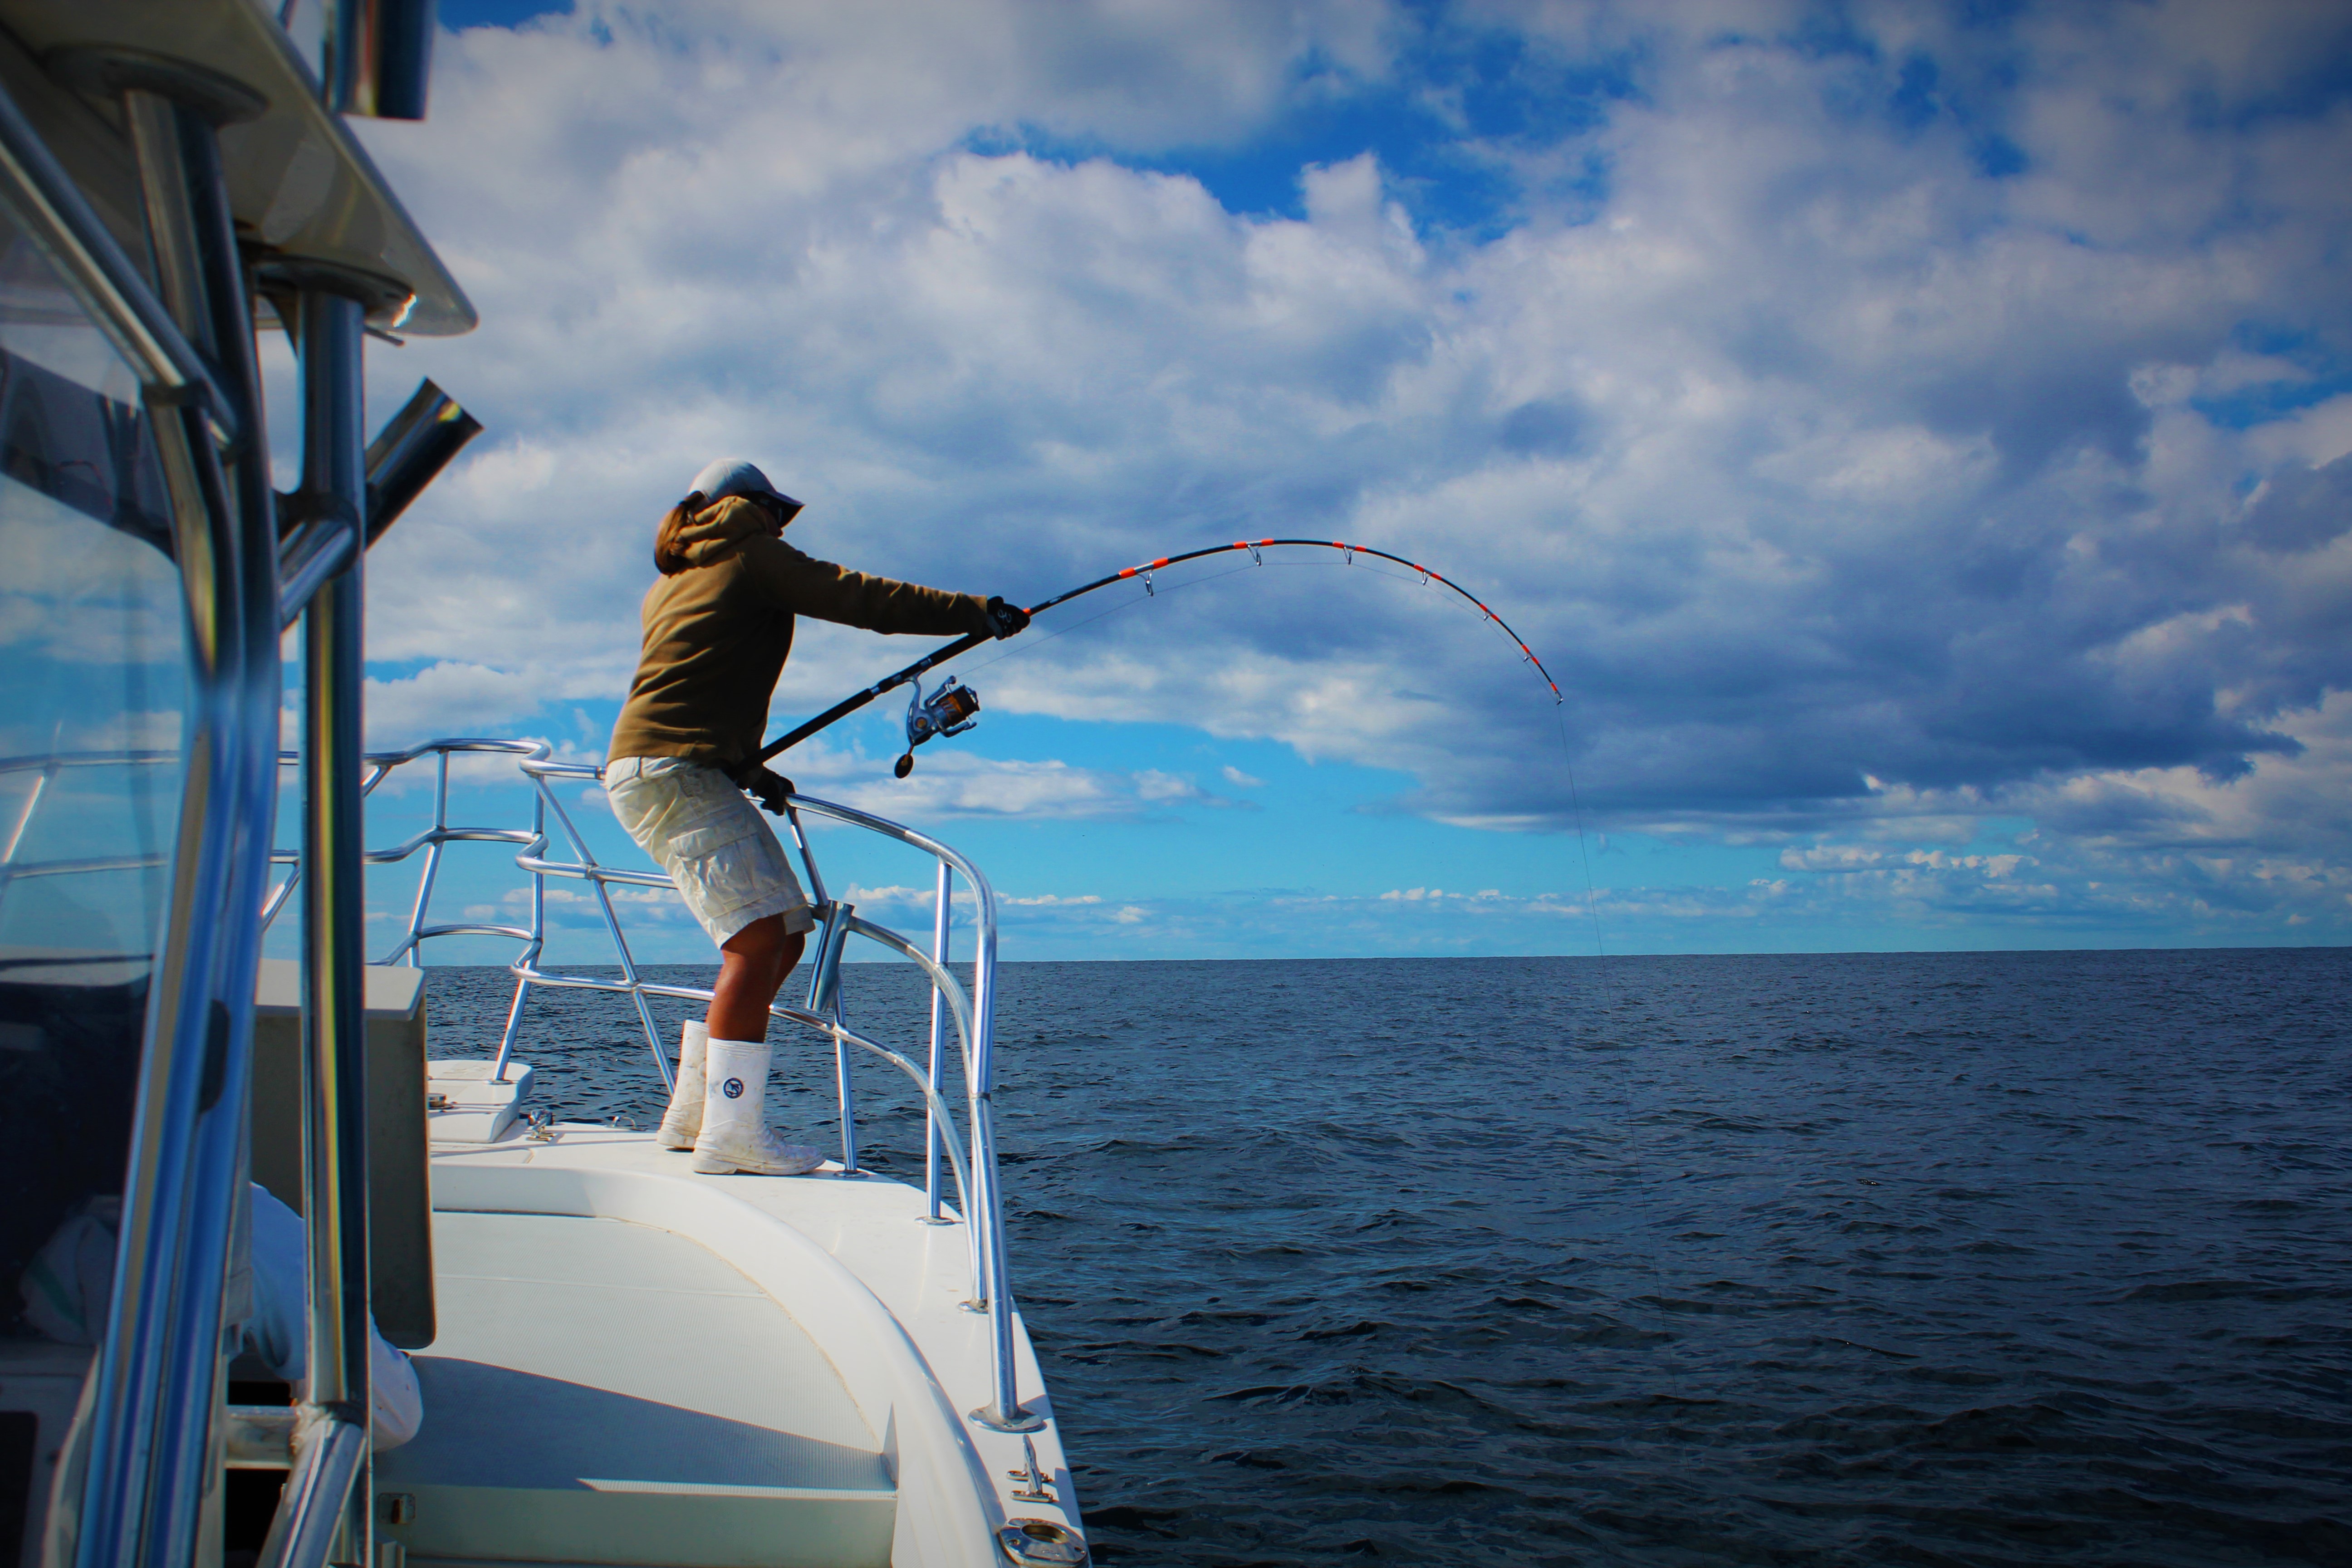 Coastal Charters Sportfishing